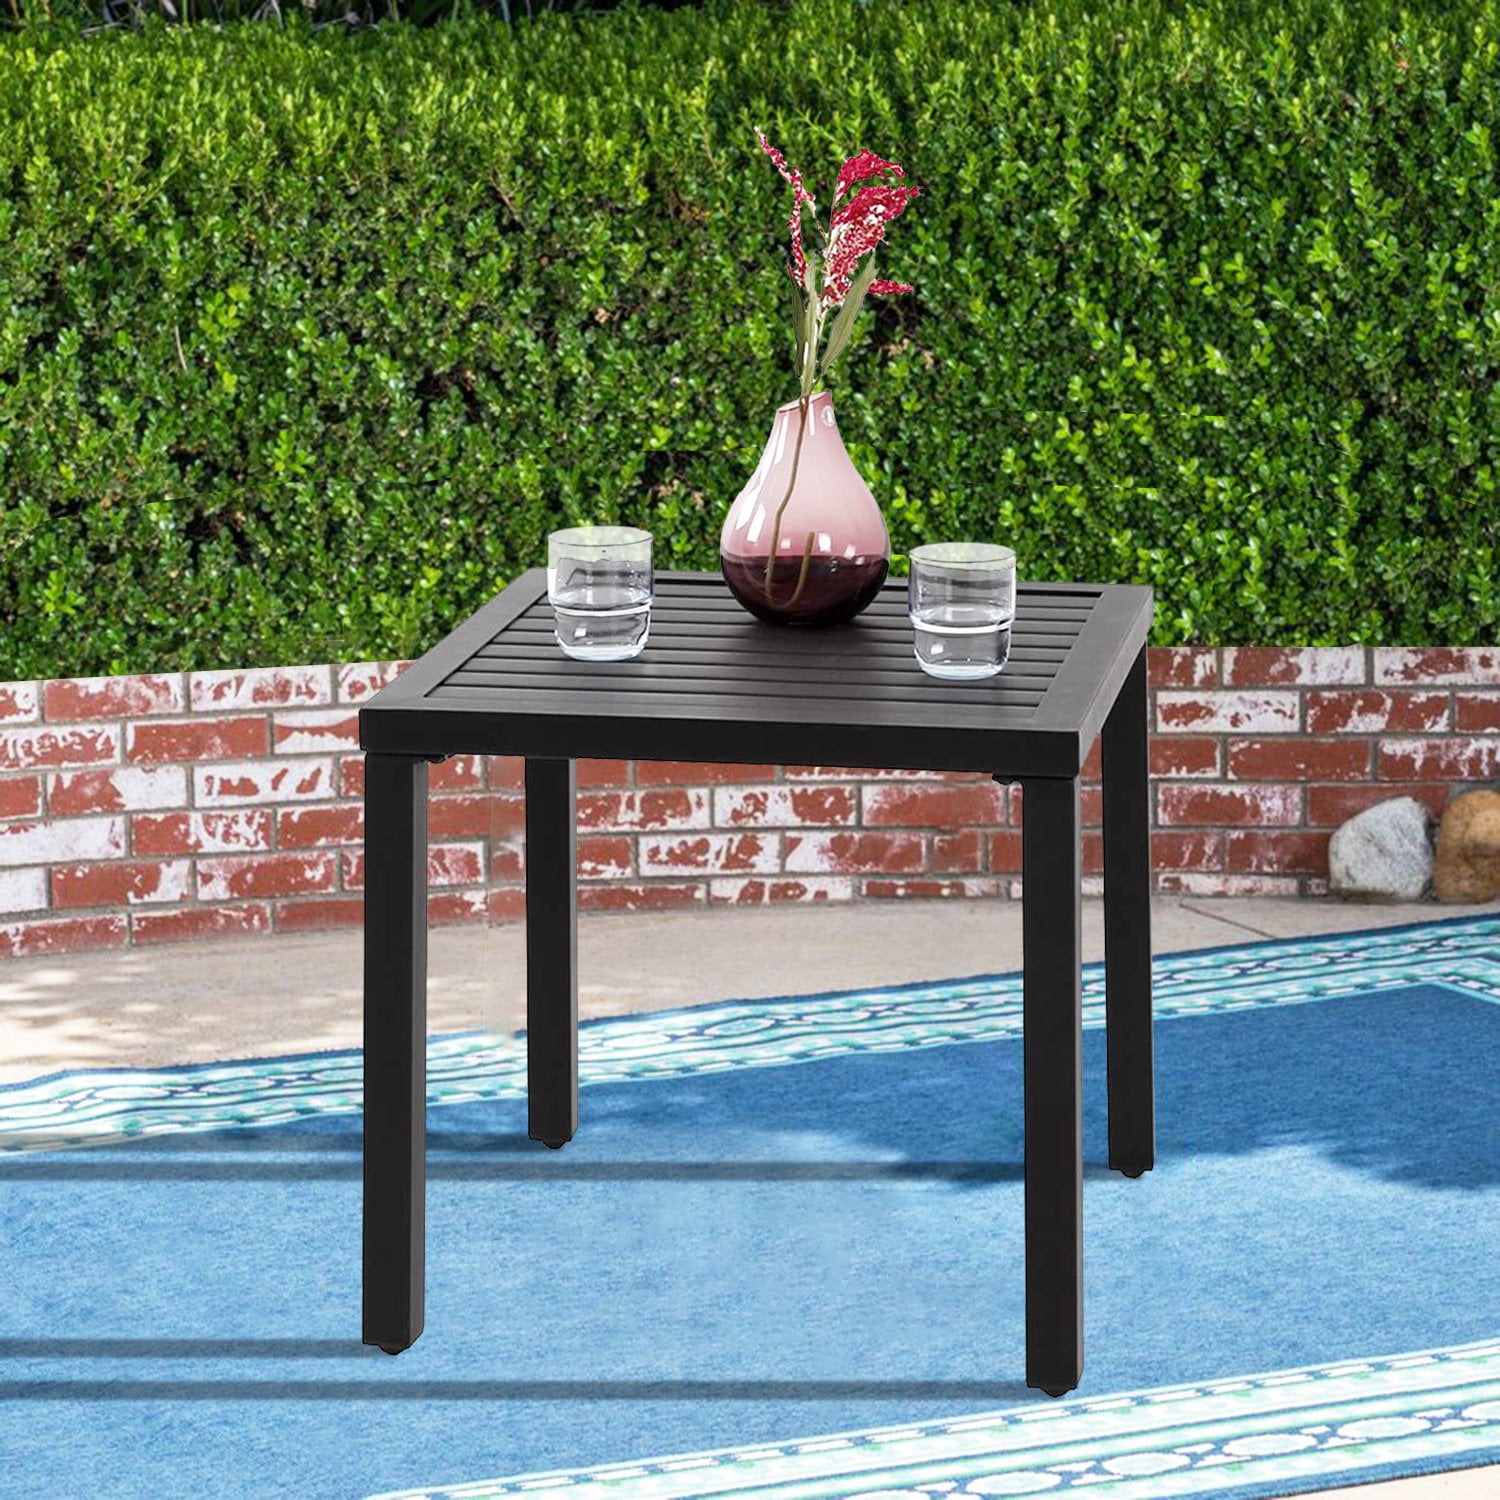 Kmart outdoor side tables - nightDer